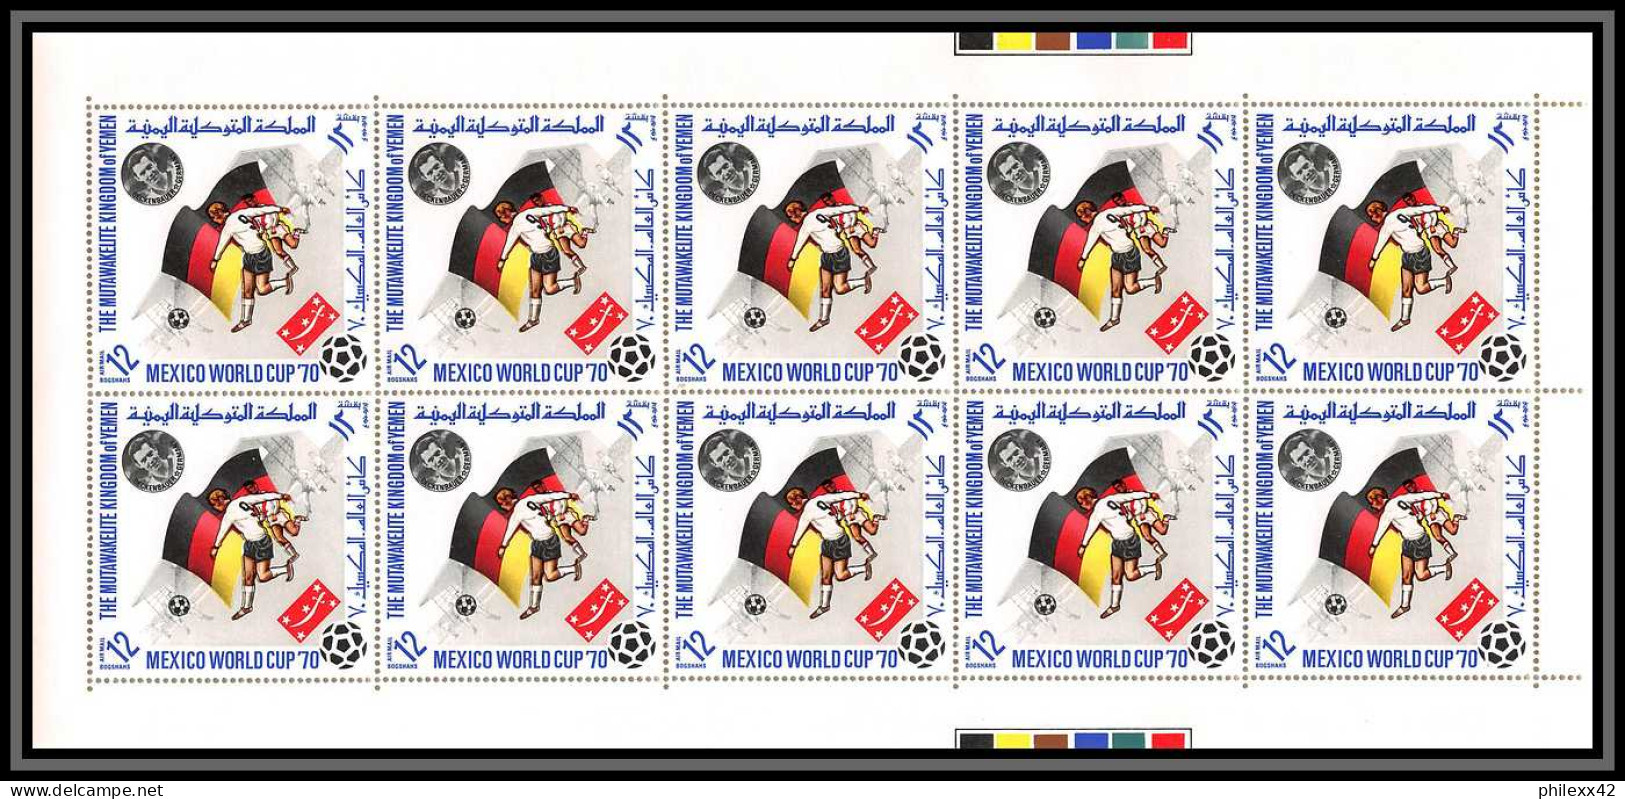 Yemen royaume (kingdom) - 4185z/ N°979/986 A  world cup mexico 1970 stadium Football soccer neuf ** MNH feuille sheet